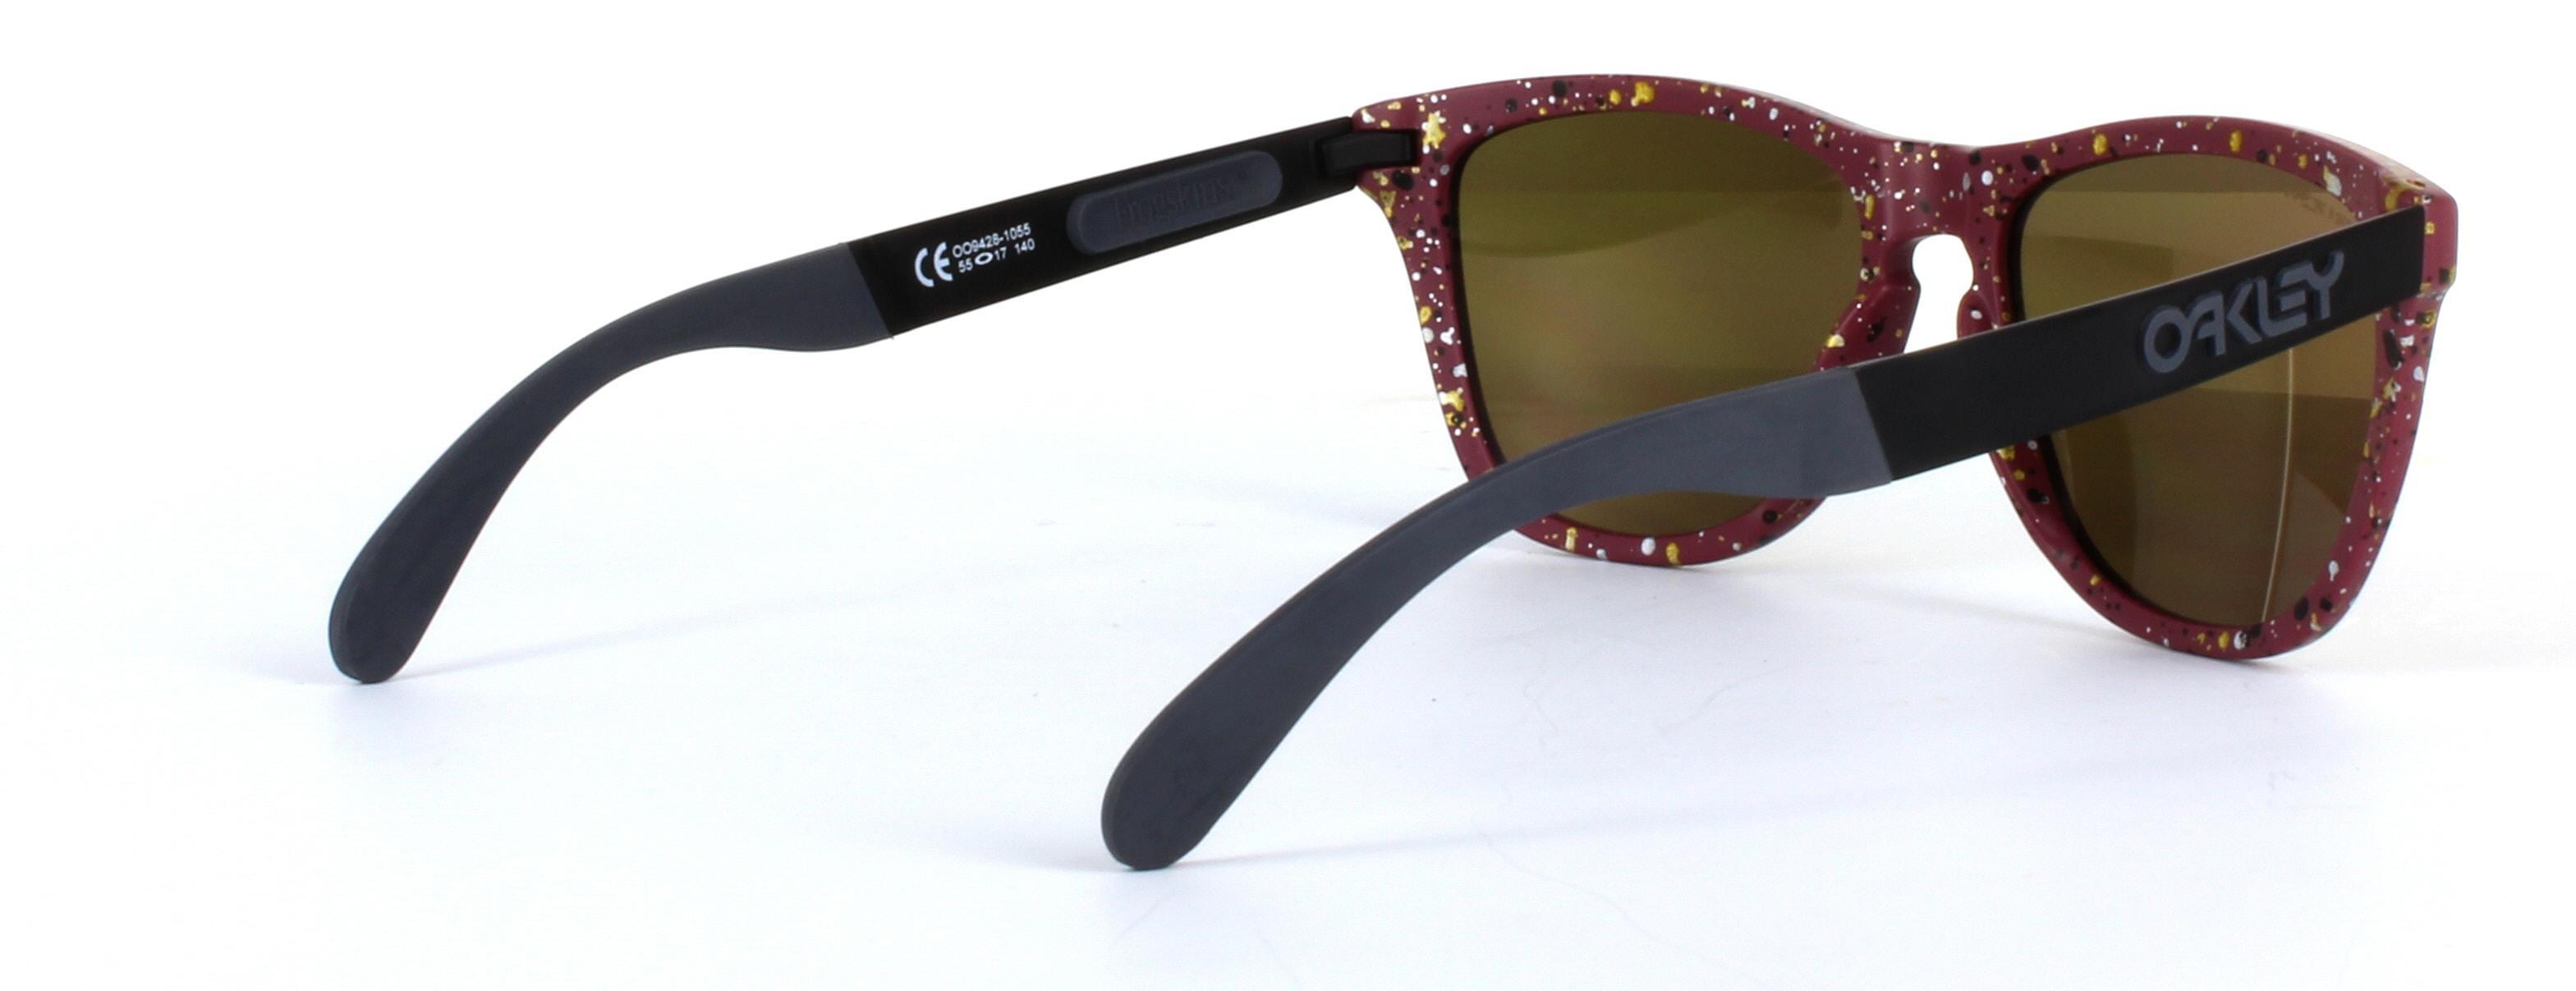 Oakley (O9428) Red Full Rim Rectangular Plastic Sunglasses - Image View 4